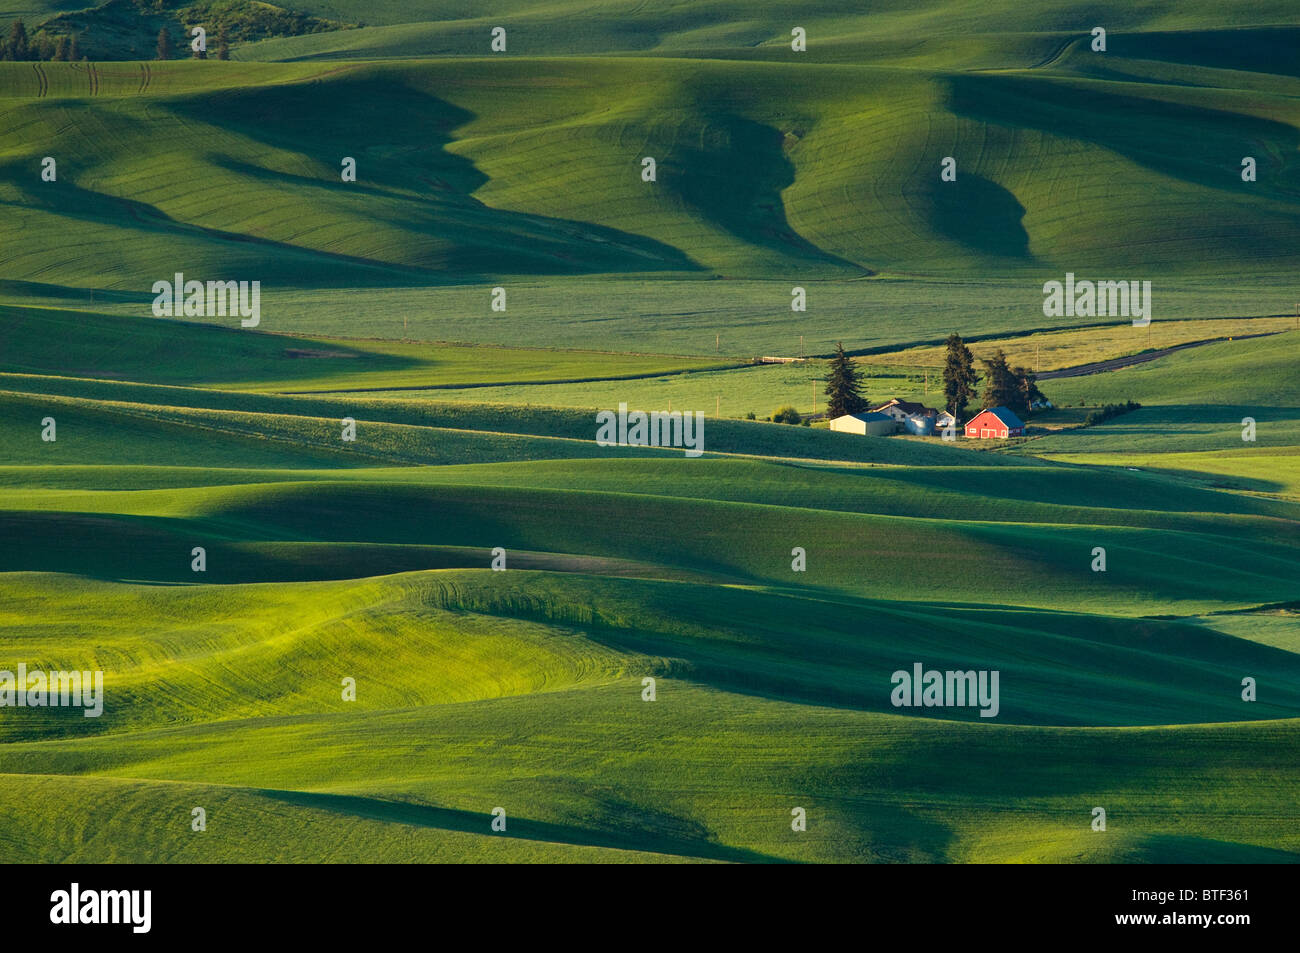 Palouse granja y campos de trigo de Steptoe Butte, Washington. Foto de stock